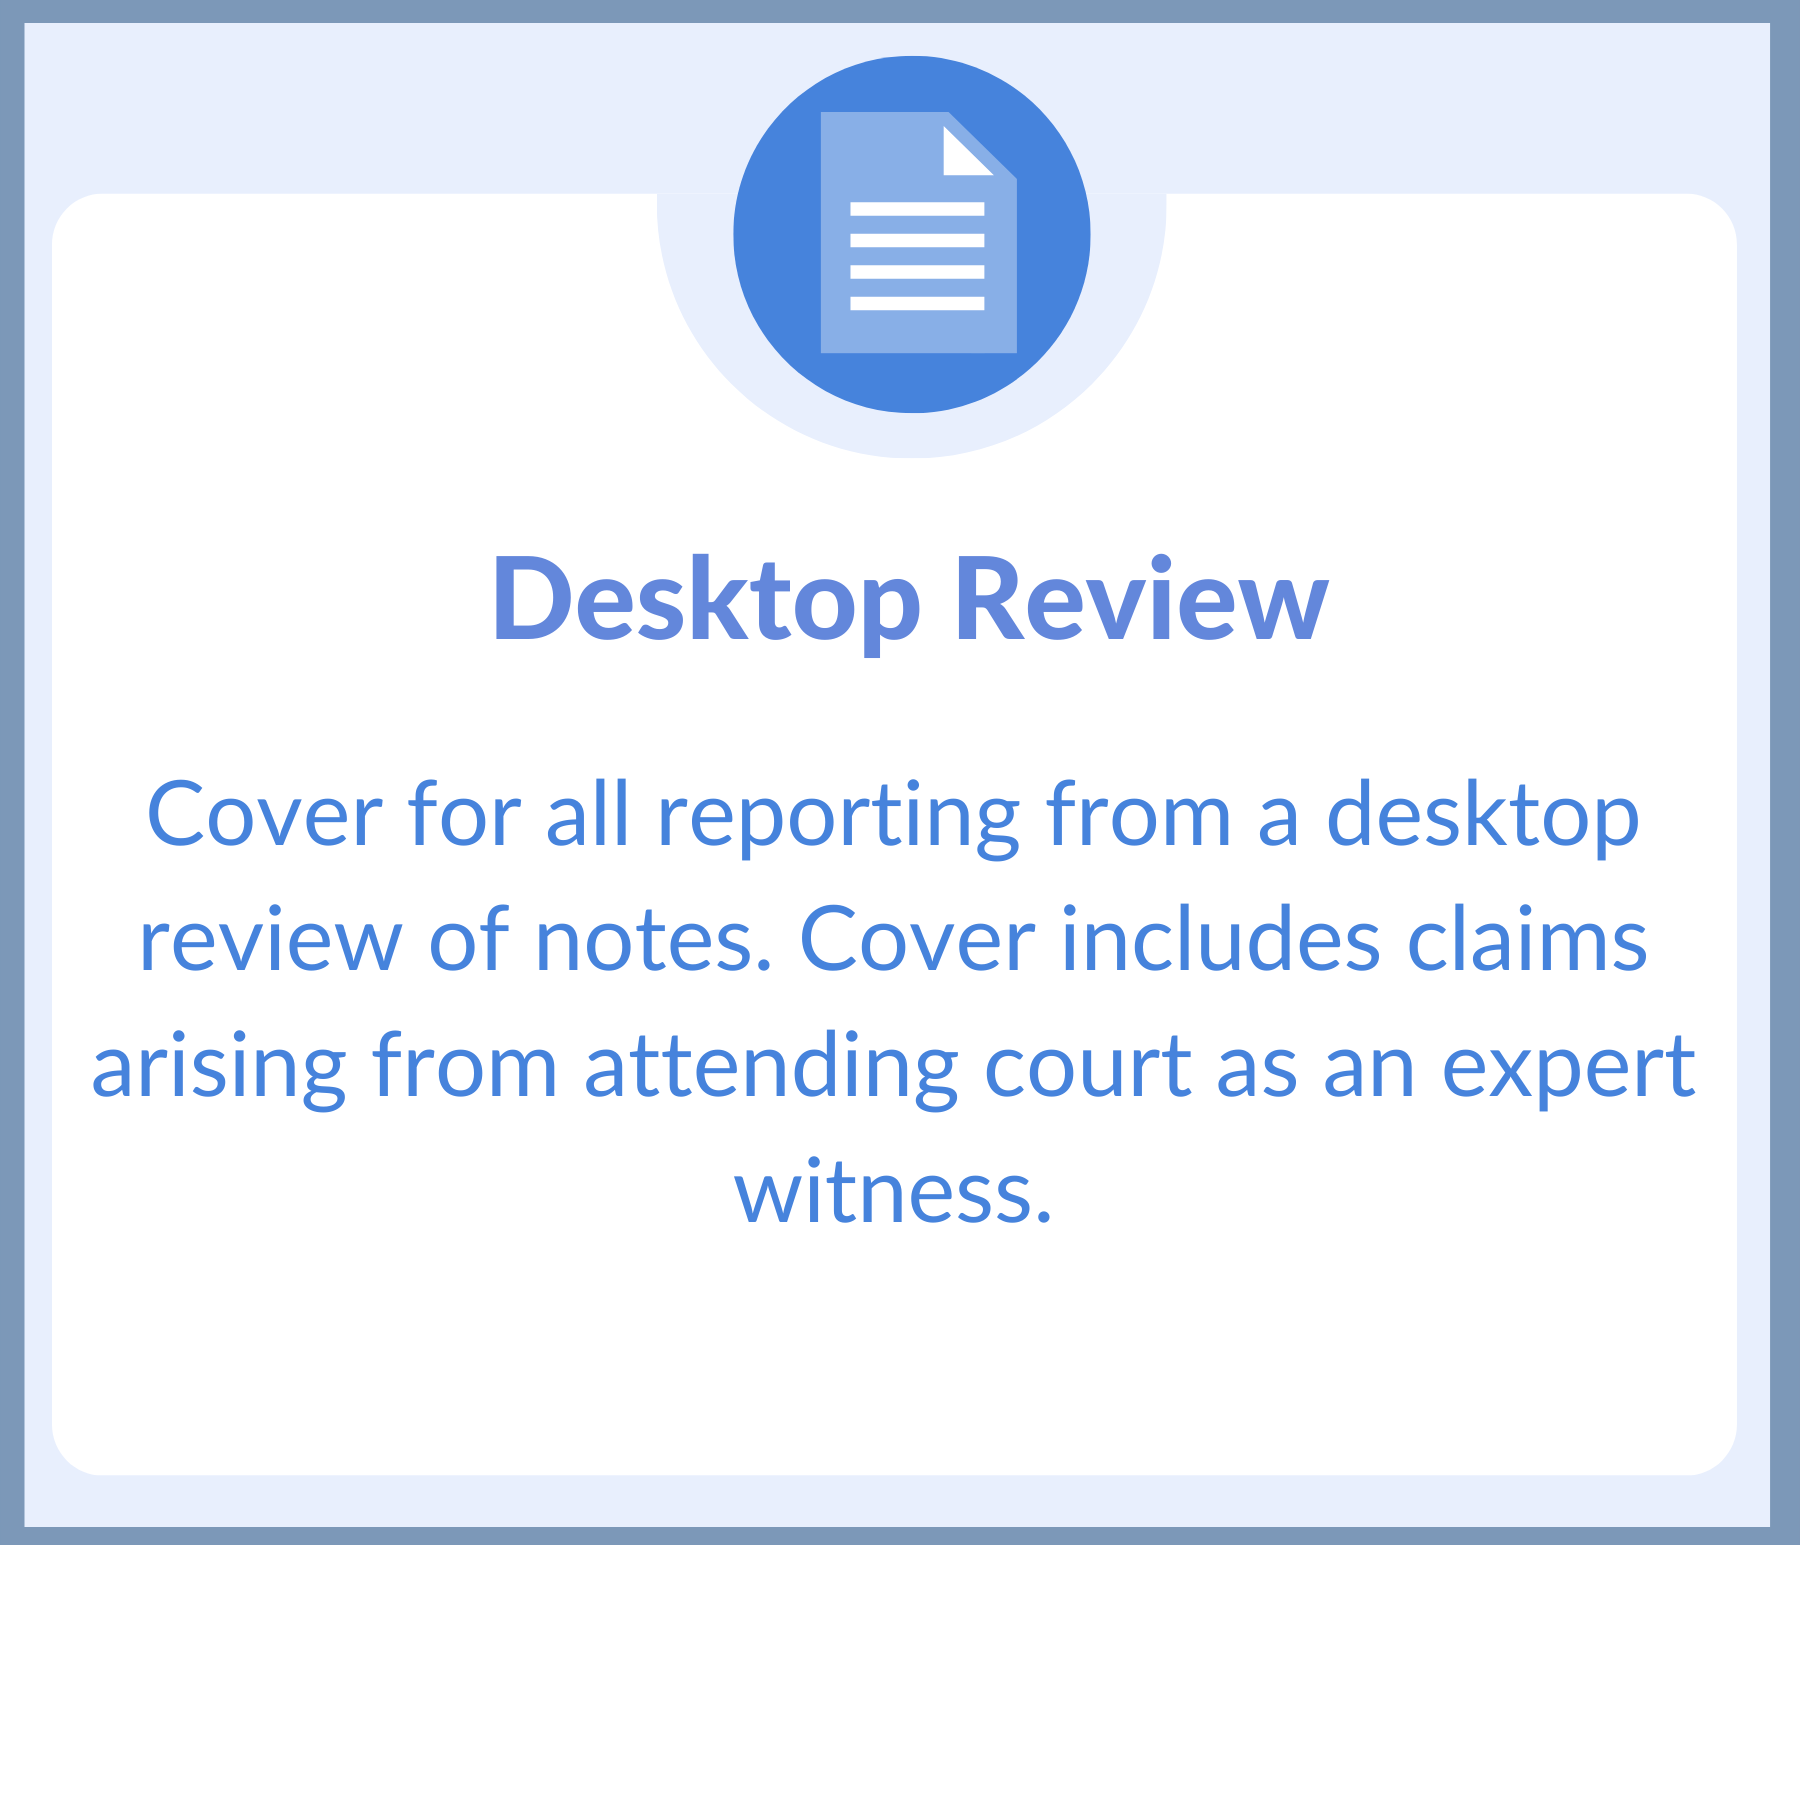 Desktop Review (6)